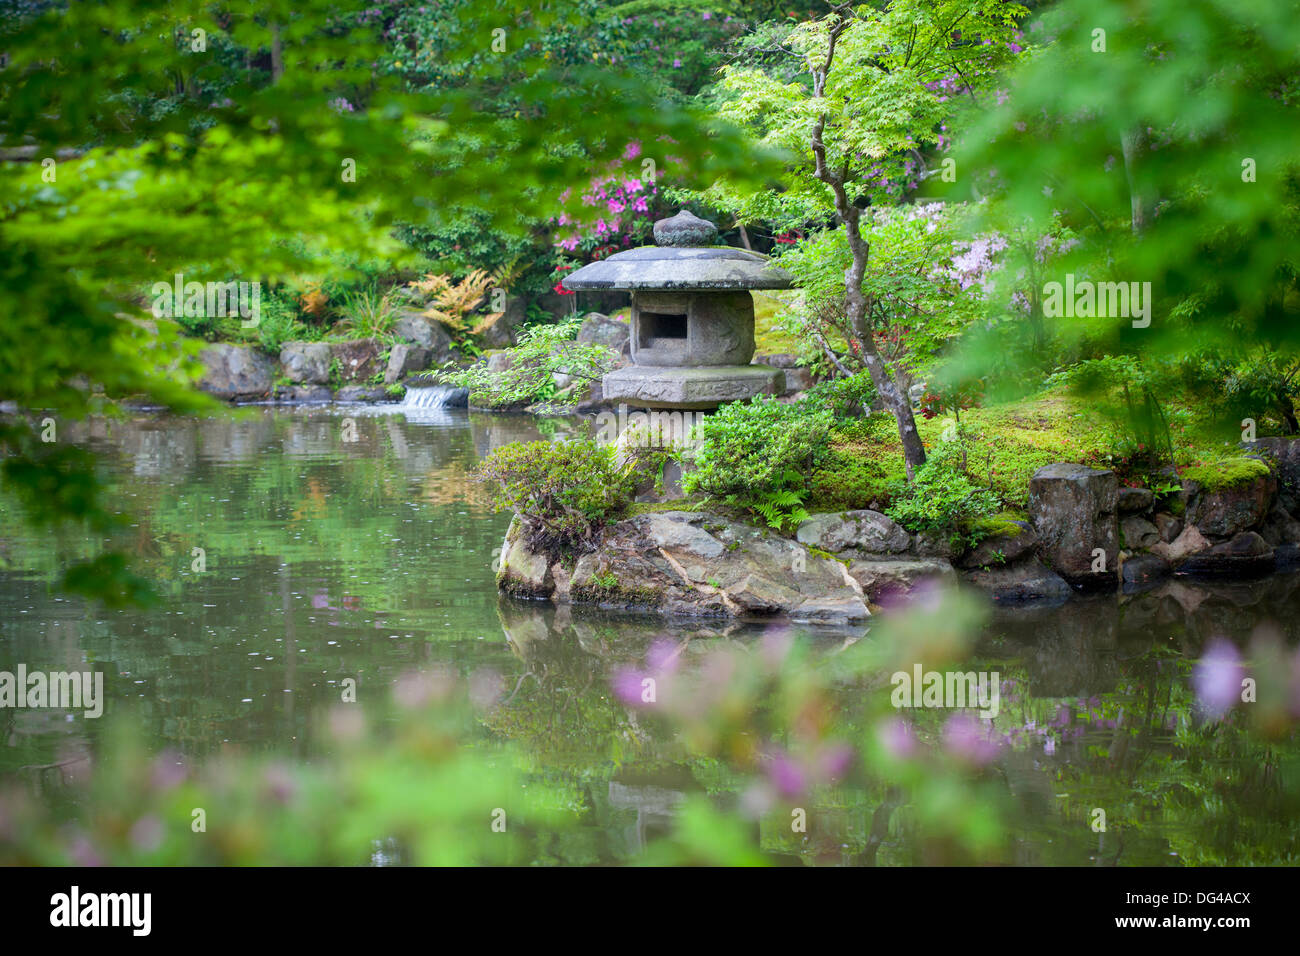 Stone lantern in a Japanese garden on a rainy day. Selective focus on the lantern. Stock Photo